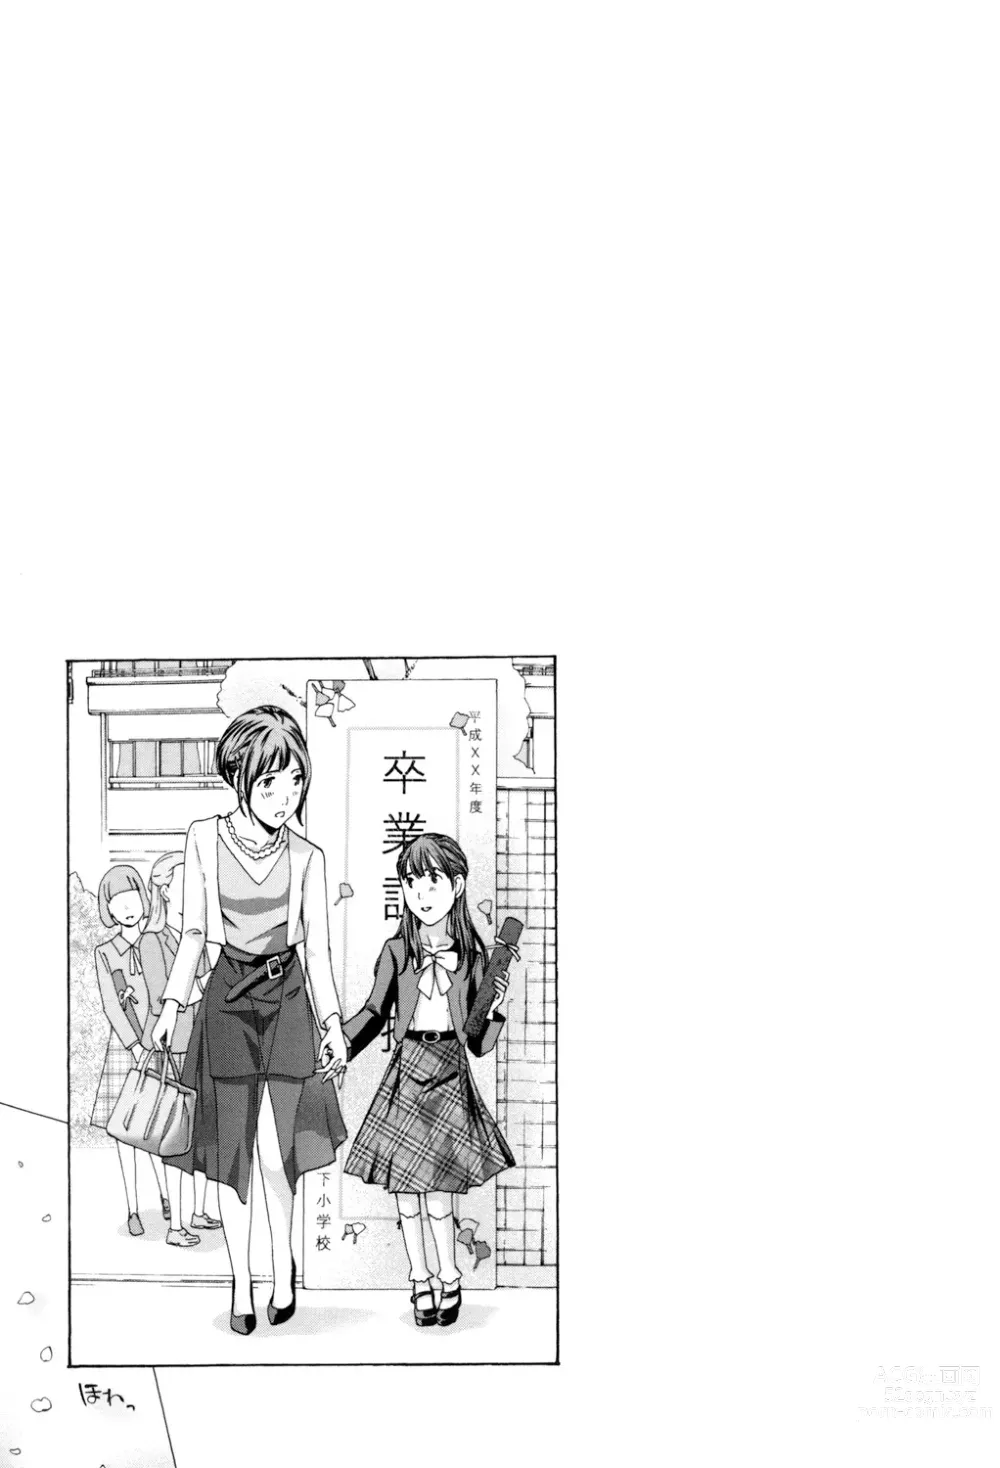 Page 191 of manga Girls Girls